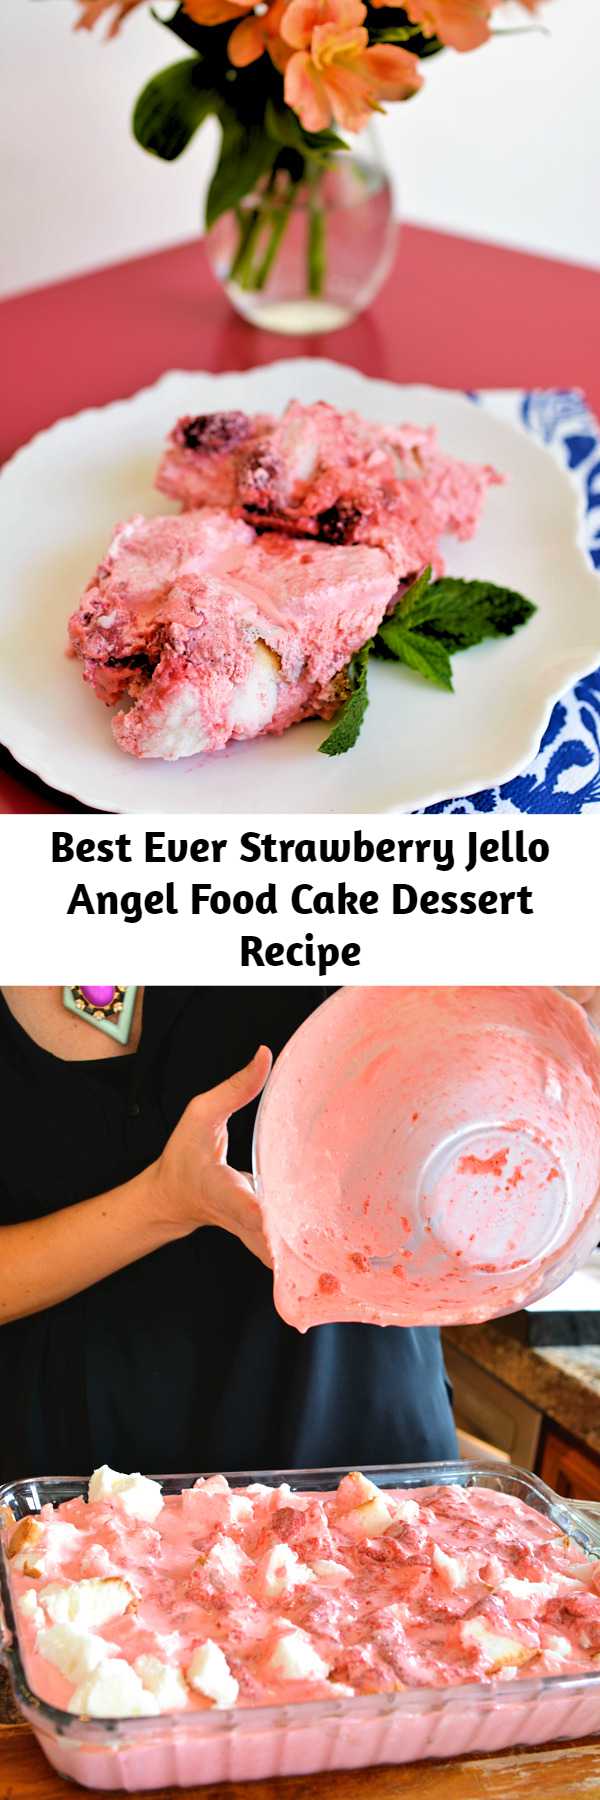 Best Ever Strawberry Jello Angel Food Cake Dessert Recipe